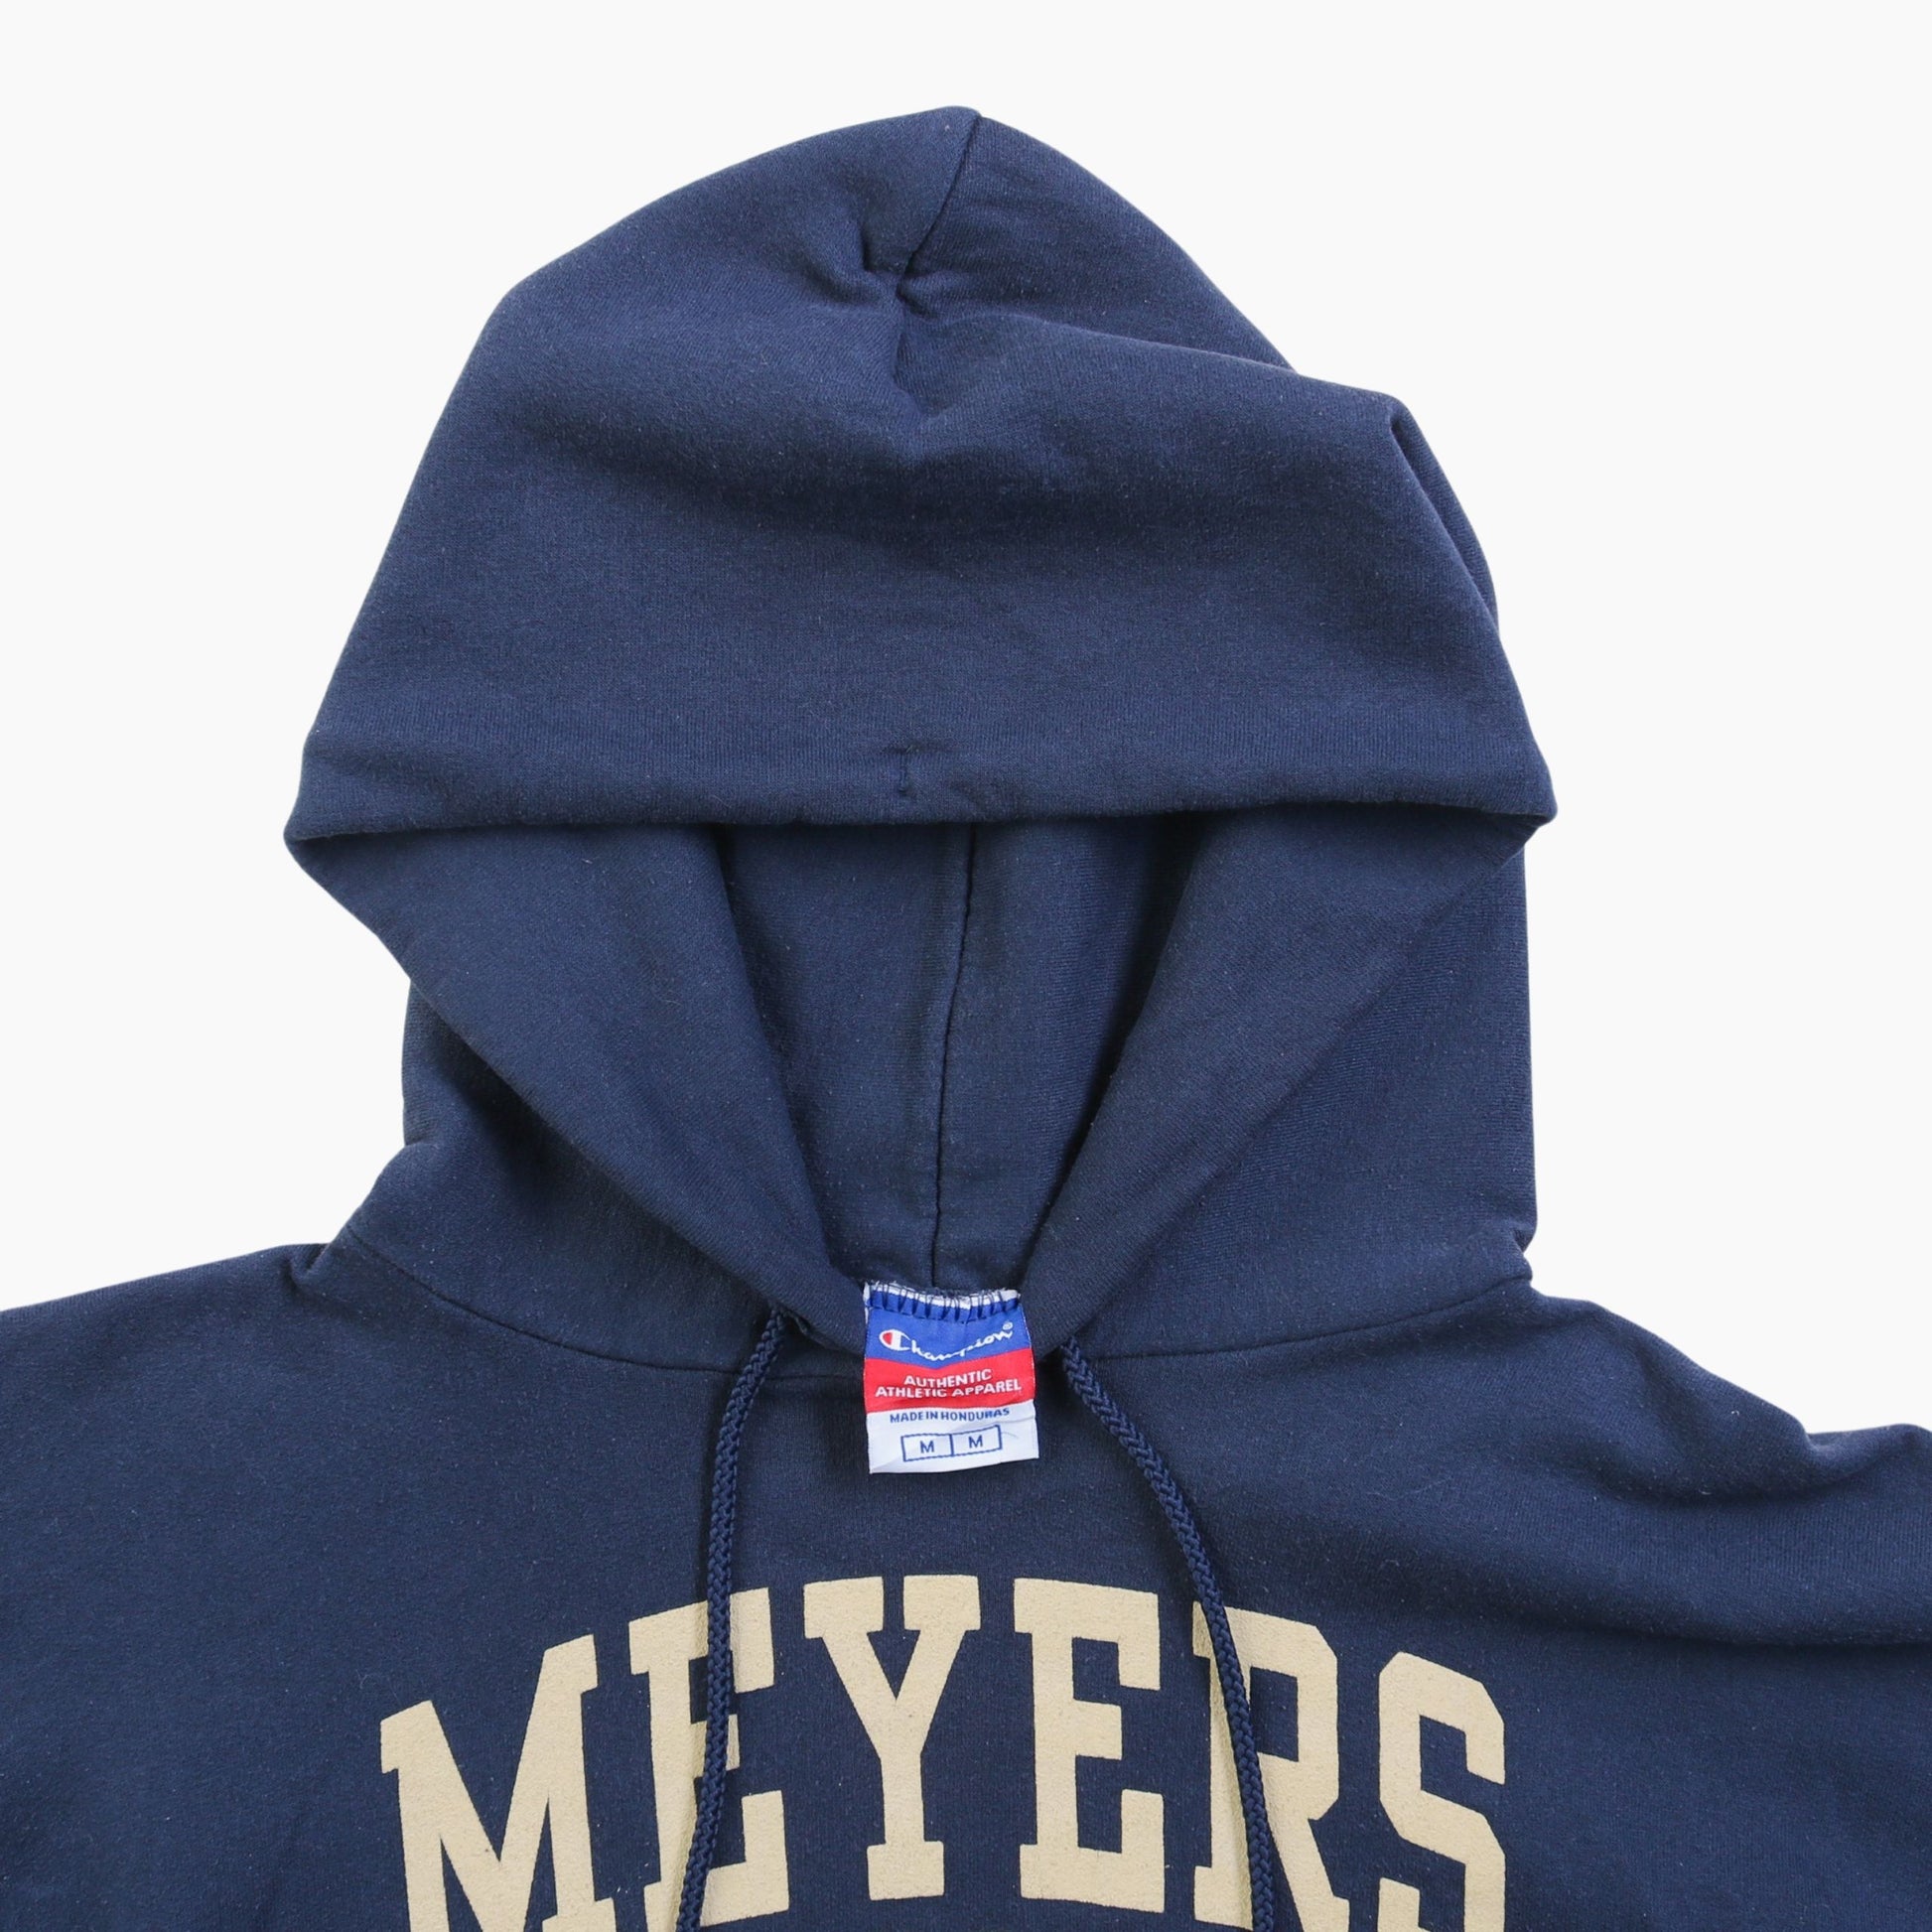 'MEYERS CROSS COUNTRY' Champion Hooded Sweatshirt - American Madness